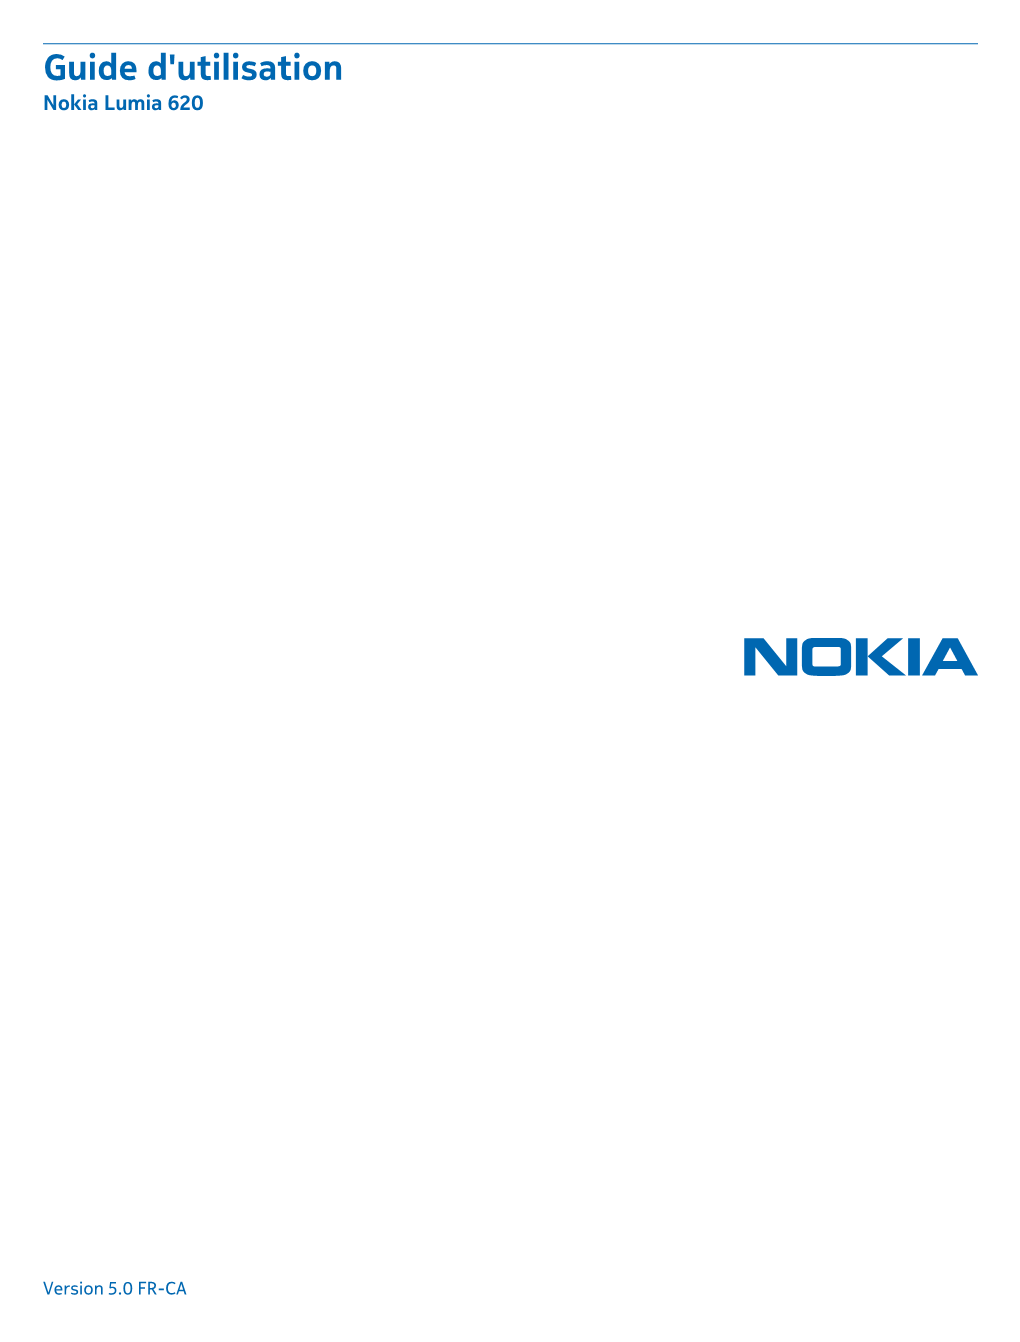 Guide D'utilisation Du Nokia Lumia